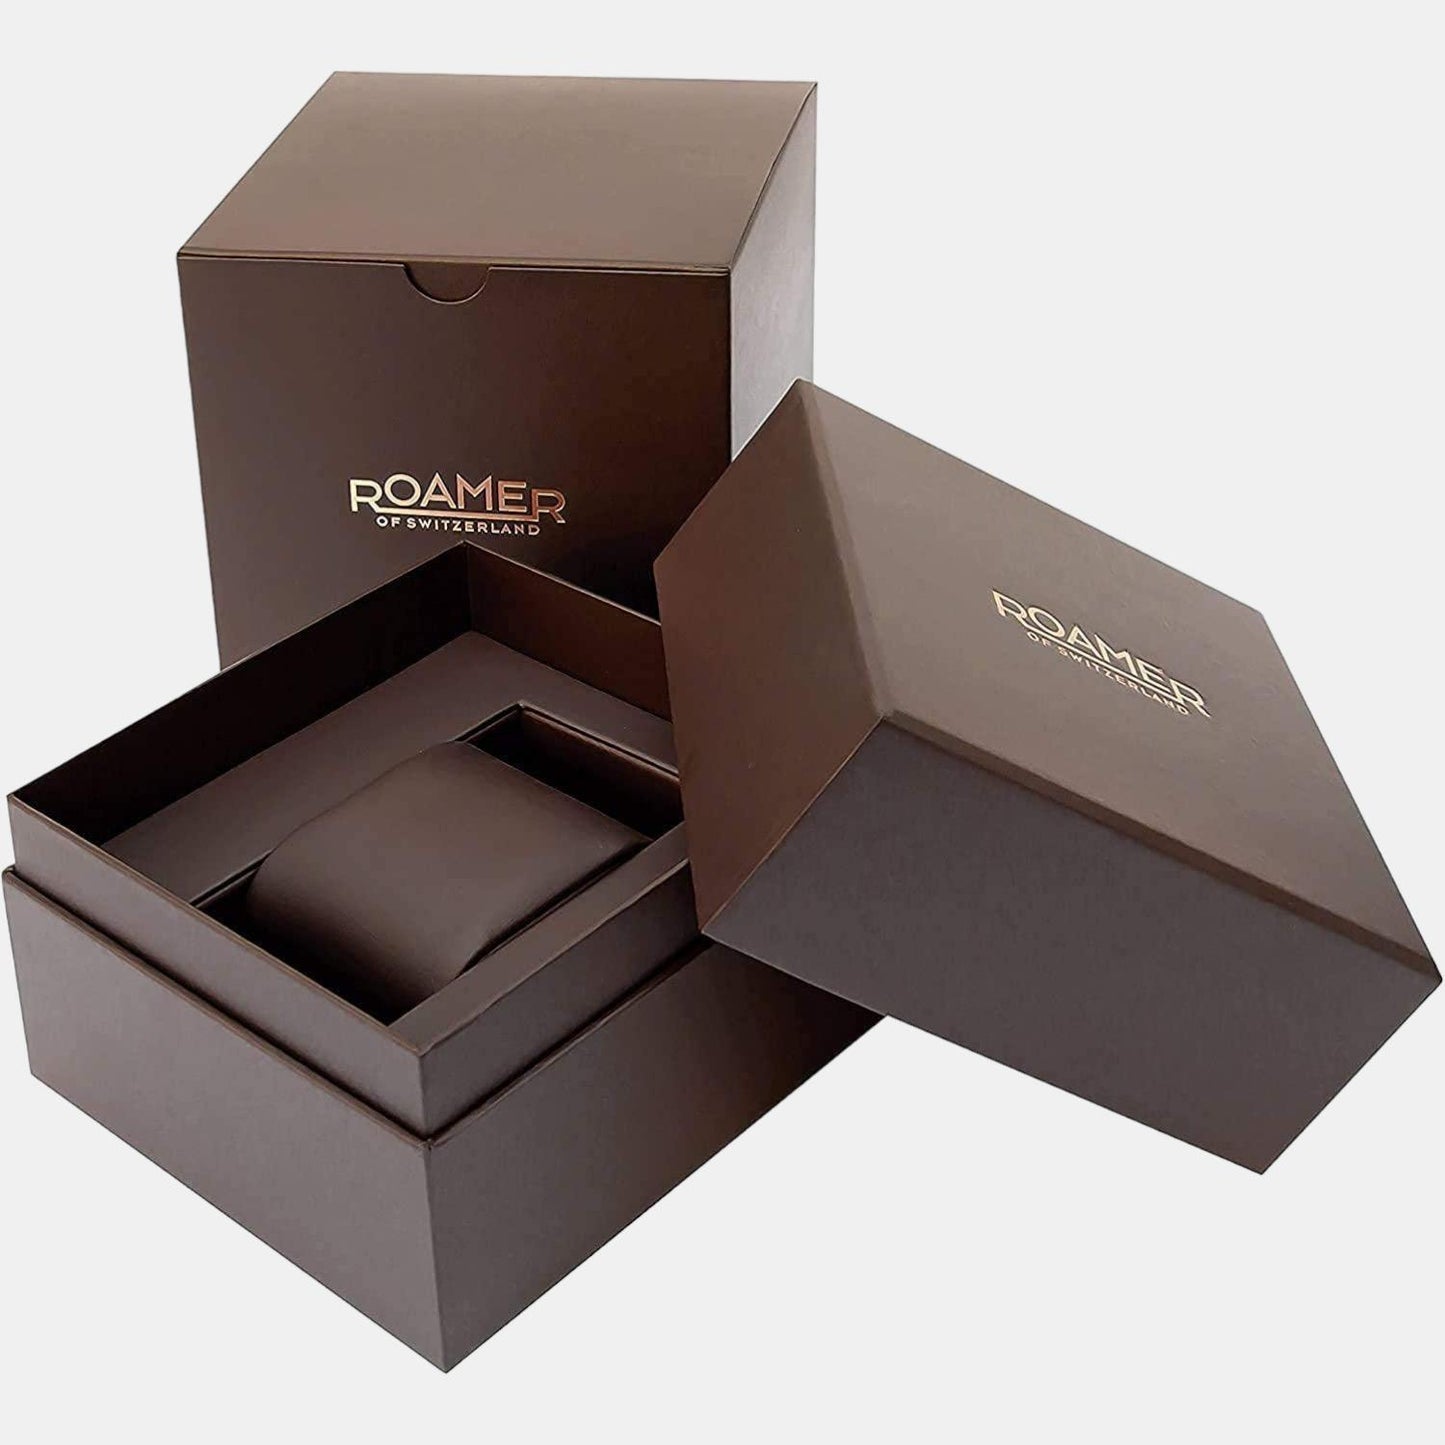 roamer-ceramic-cream-analog-male-watch-658833-49-35-61